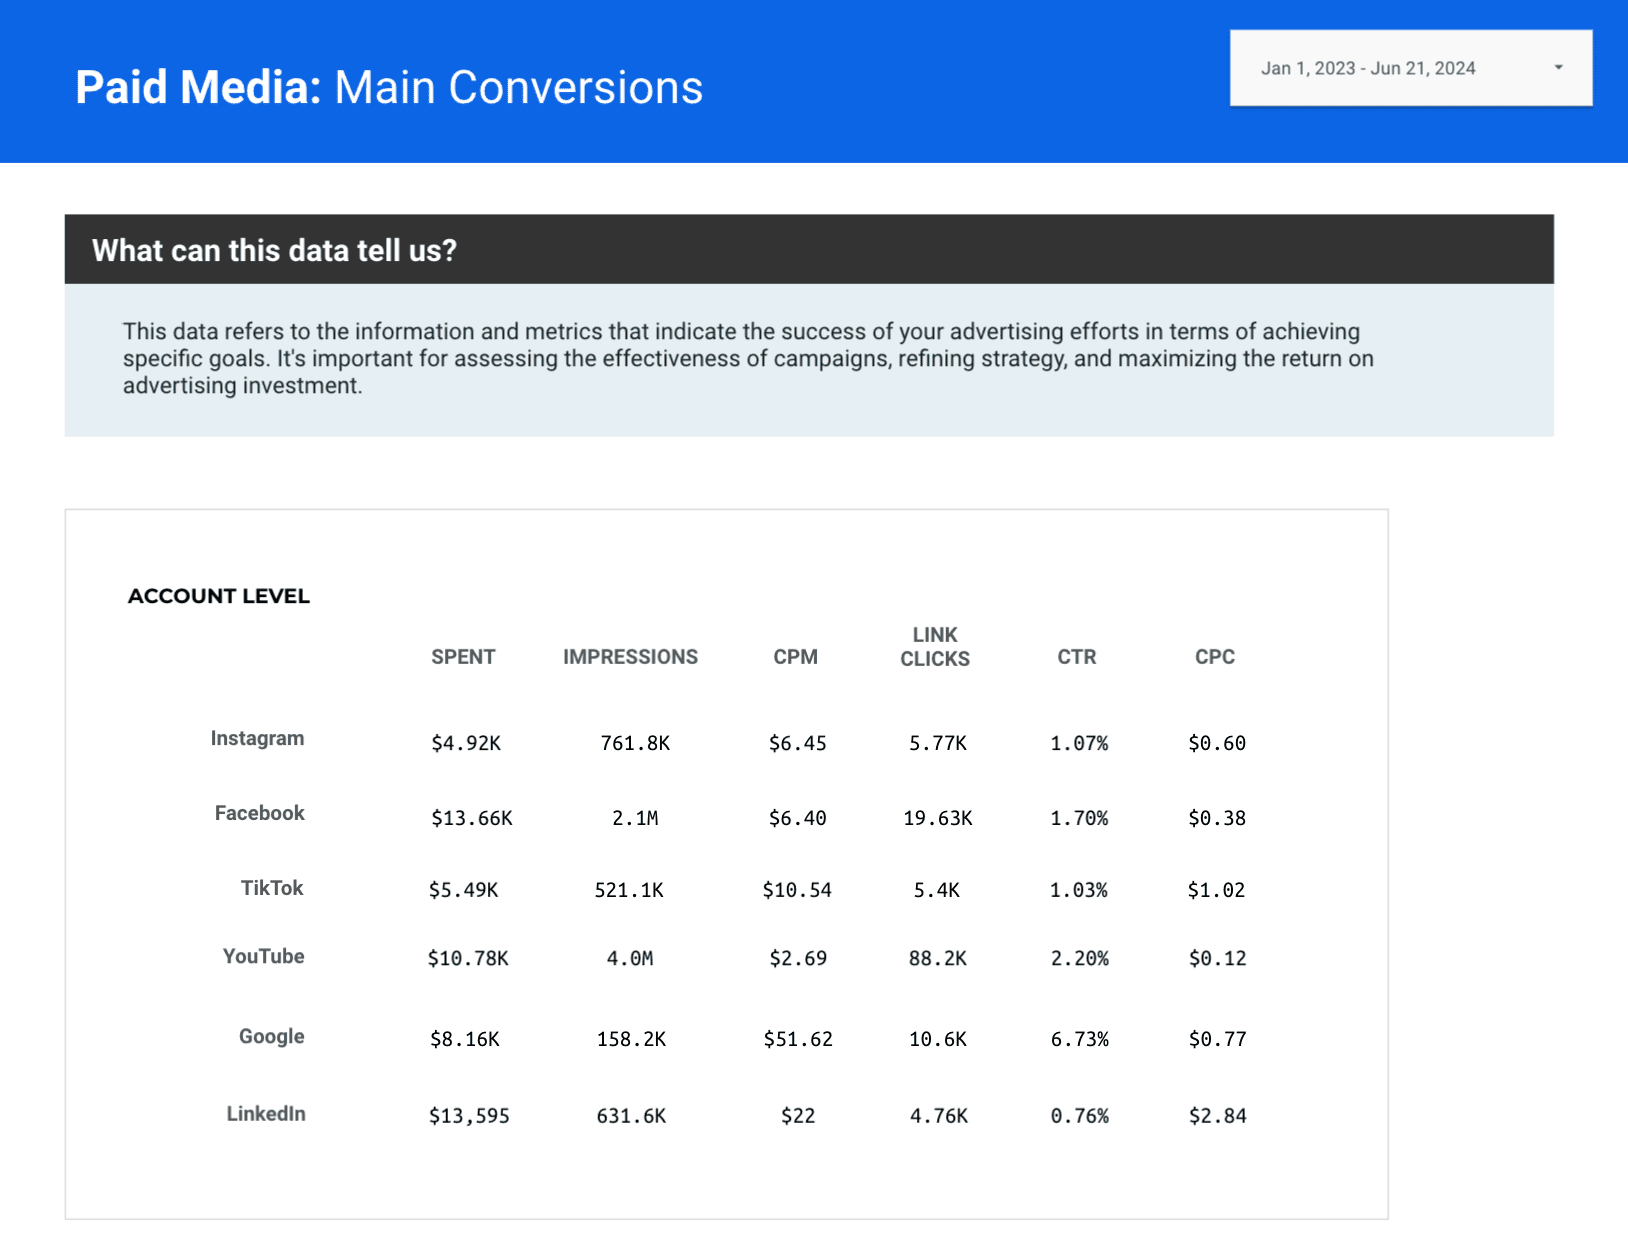 Paid media main conversions